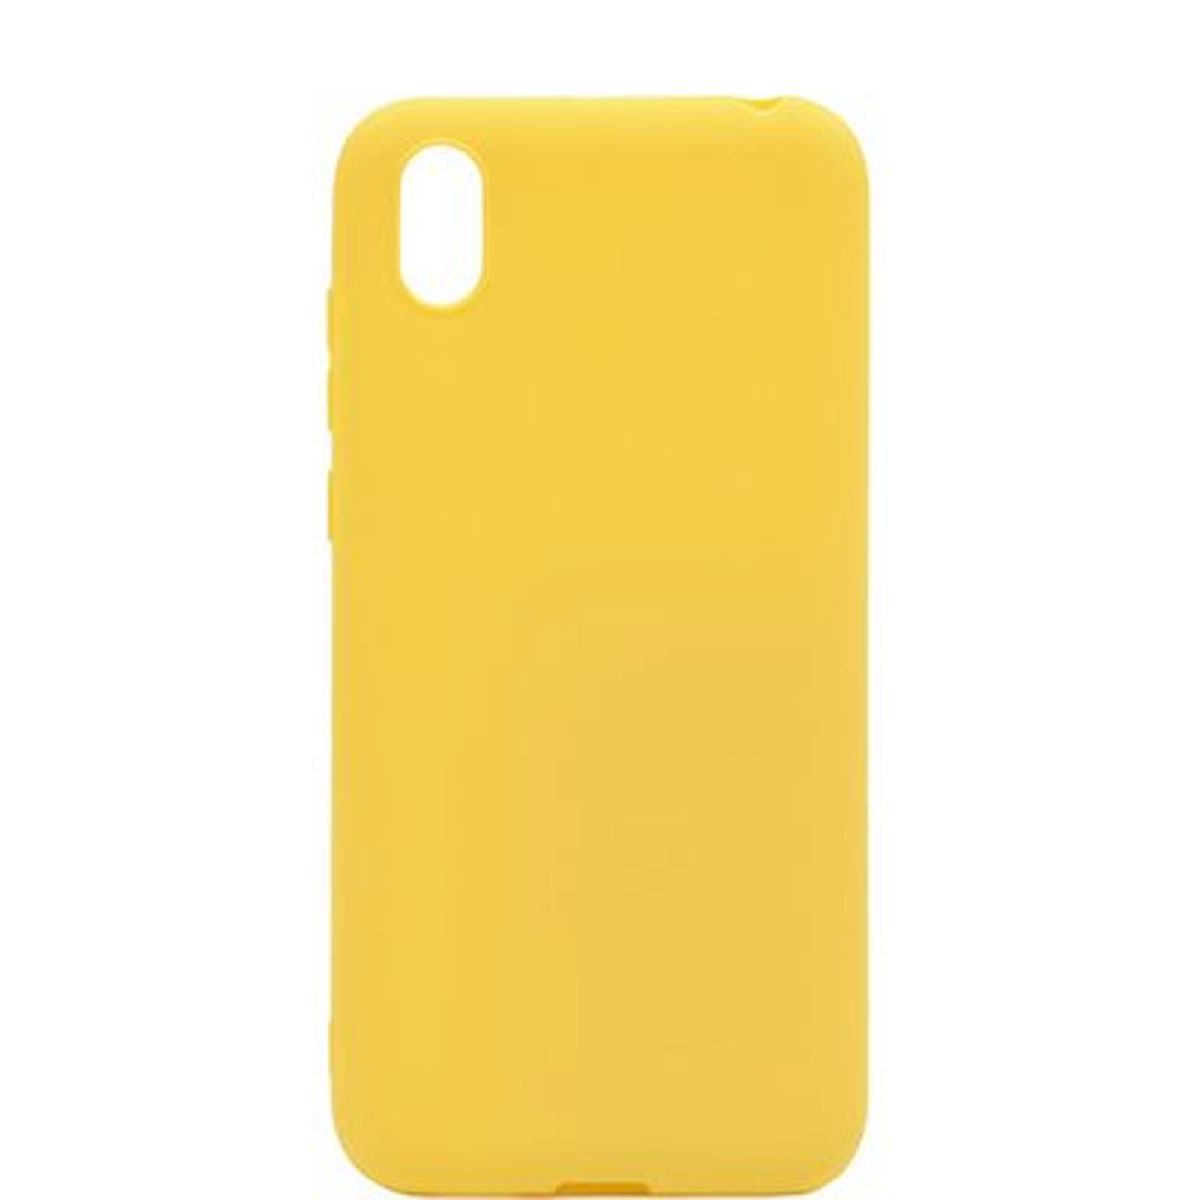 Чехол накладка GPS для HUAWEI Honor 8S, Y5 2019, силикон, матовый, цвет желтый